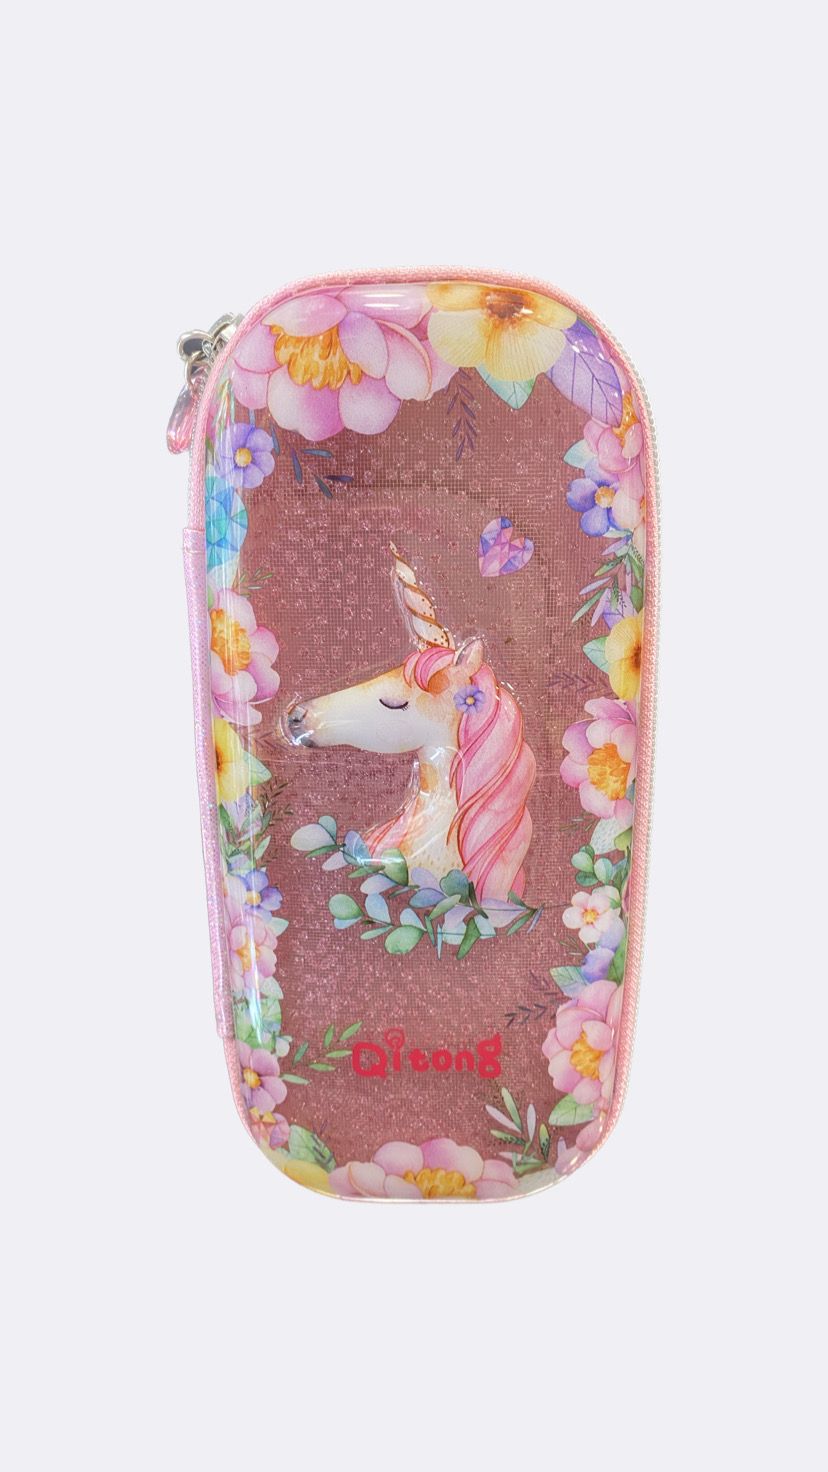 Flowered Unicorn Pencil Case